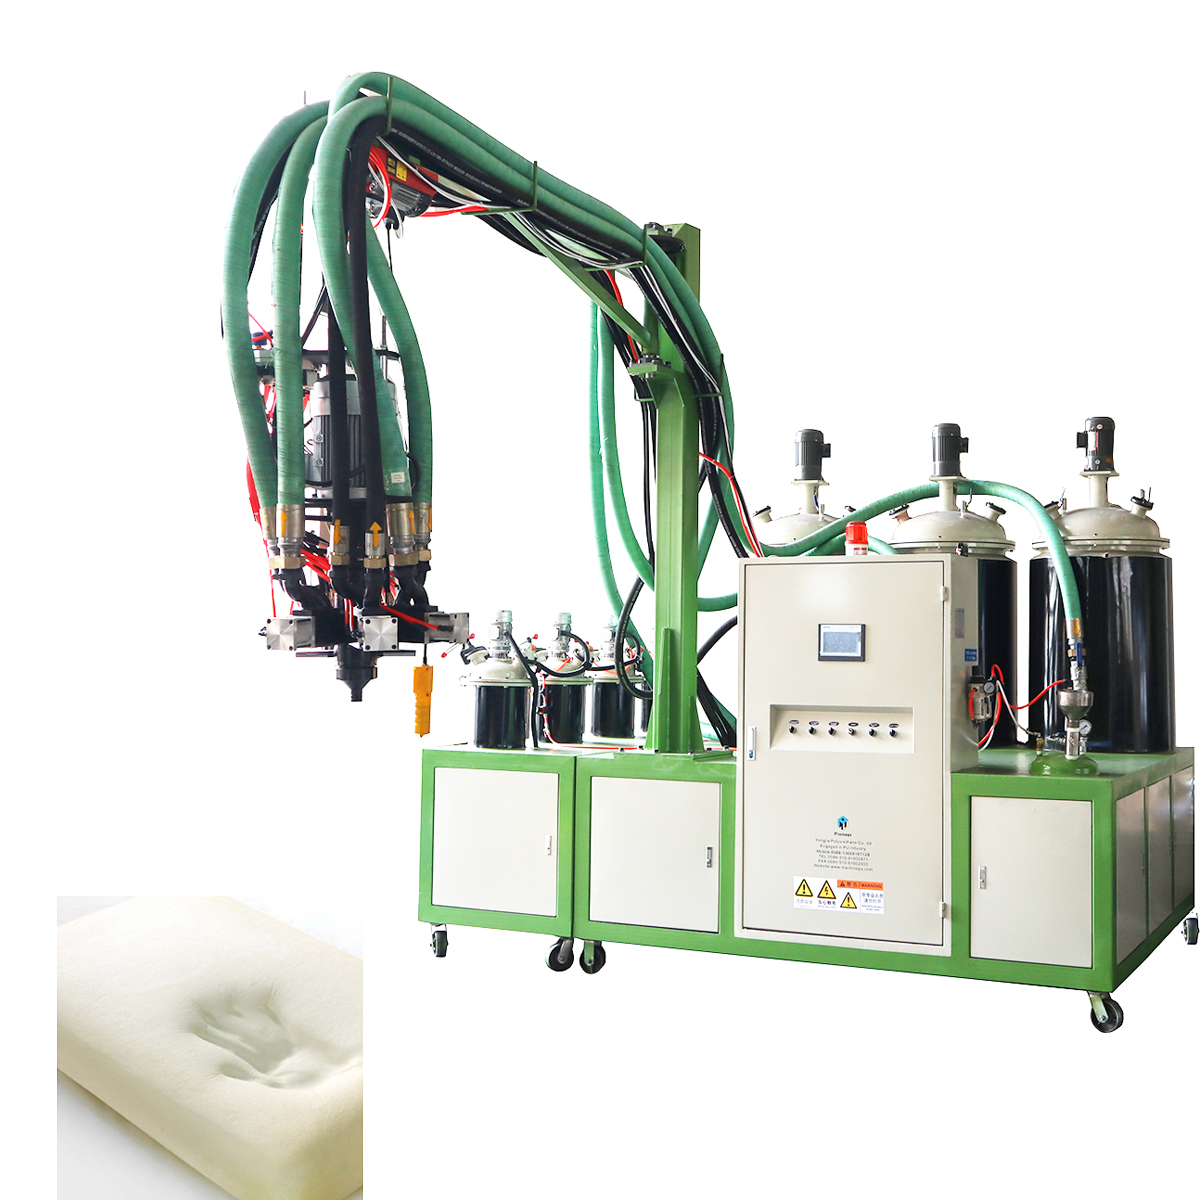 Automatic Pu Foam Machine., 10 Kw, Capacity: 400 Grams/Sec